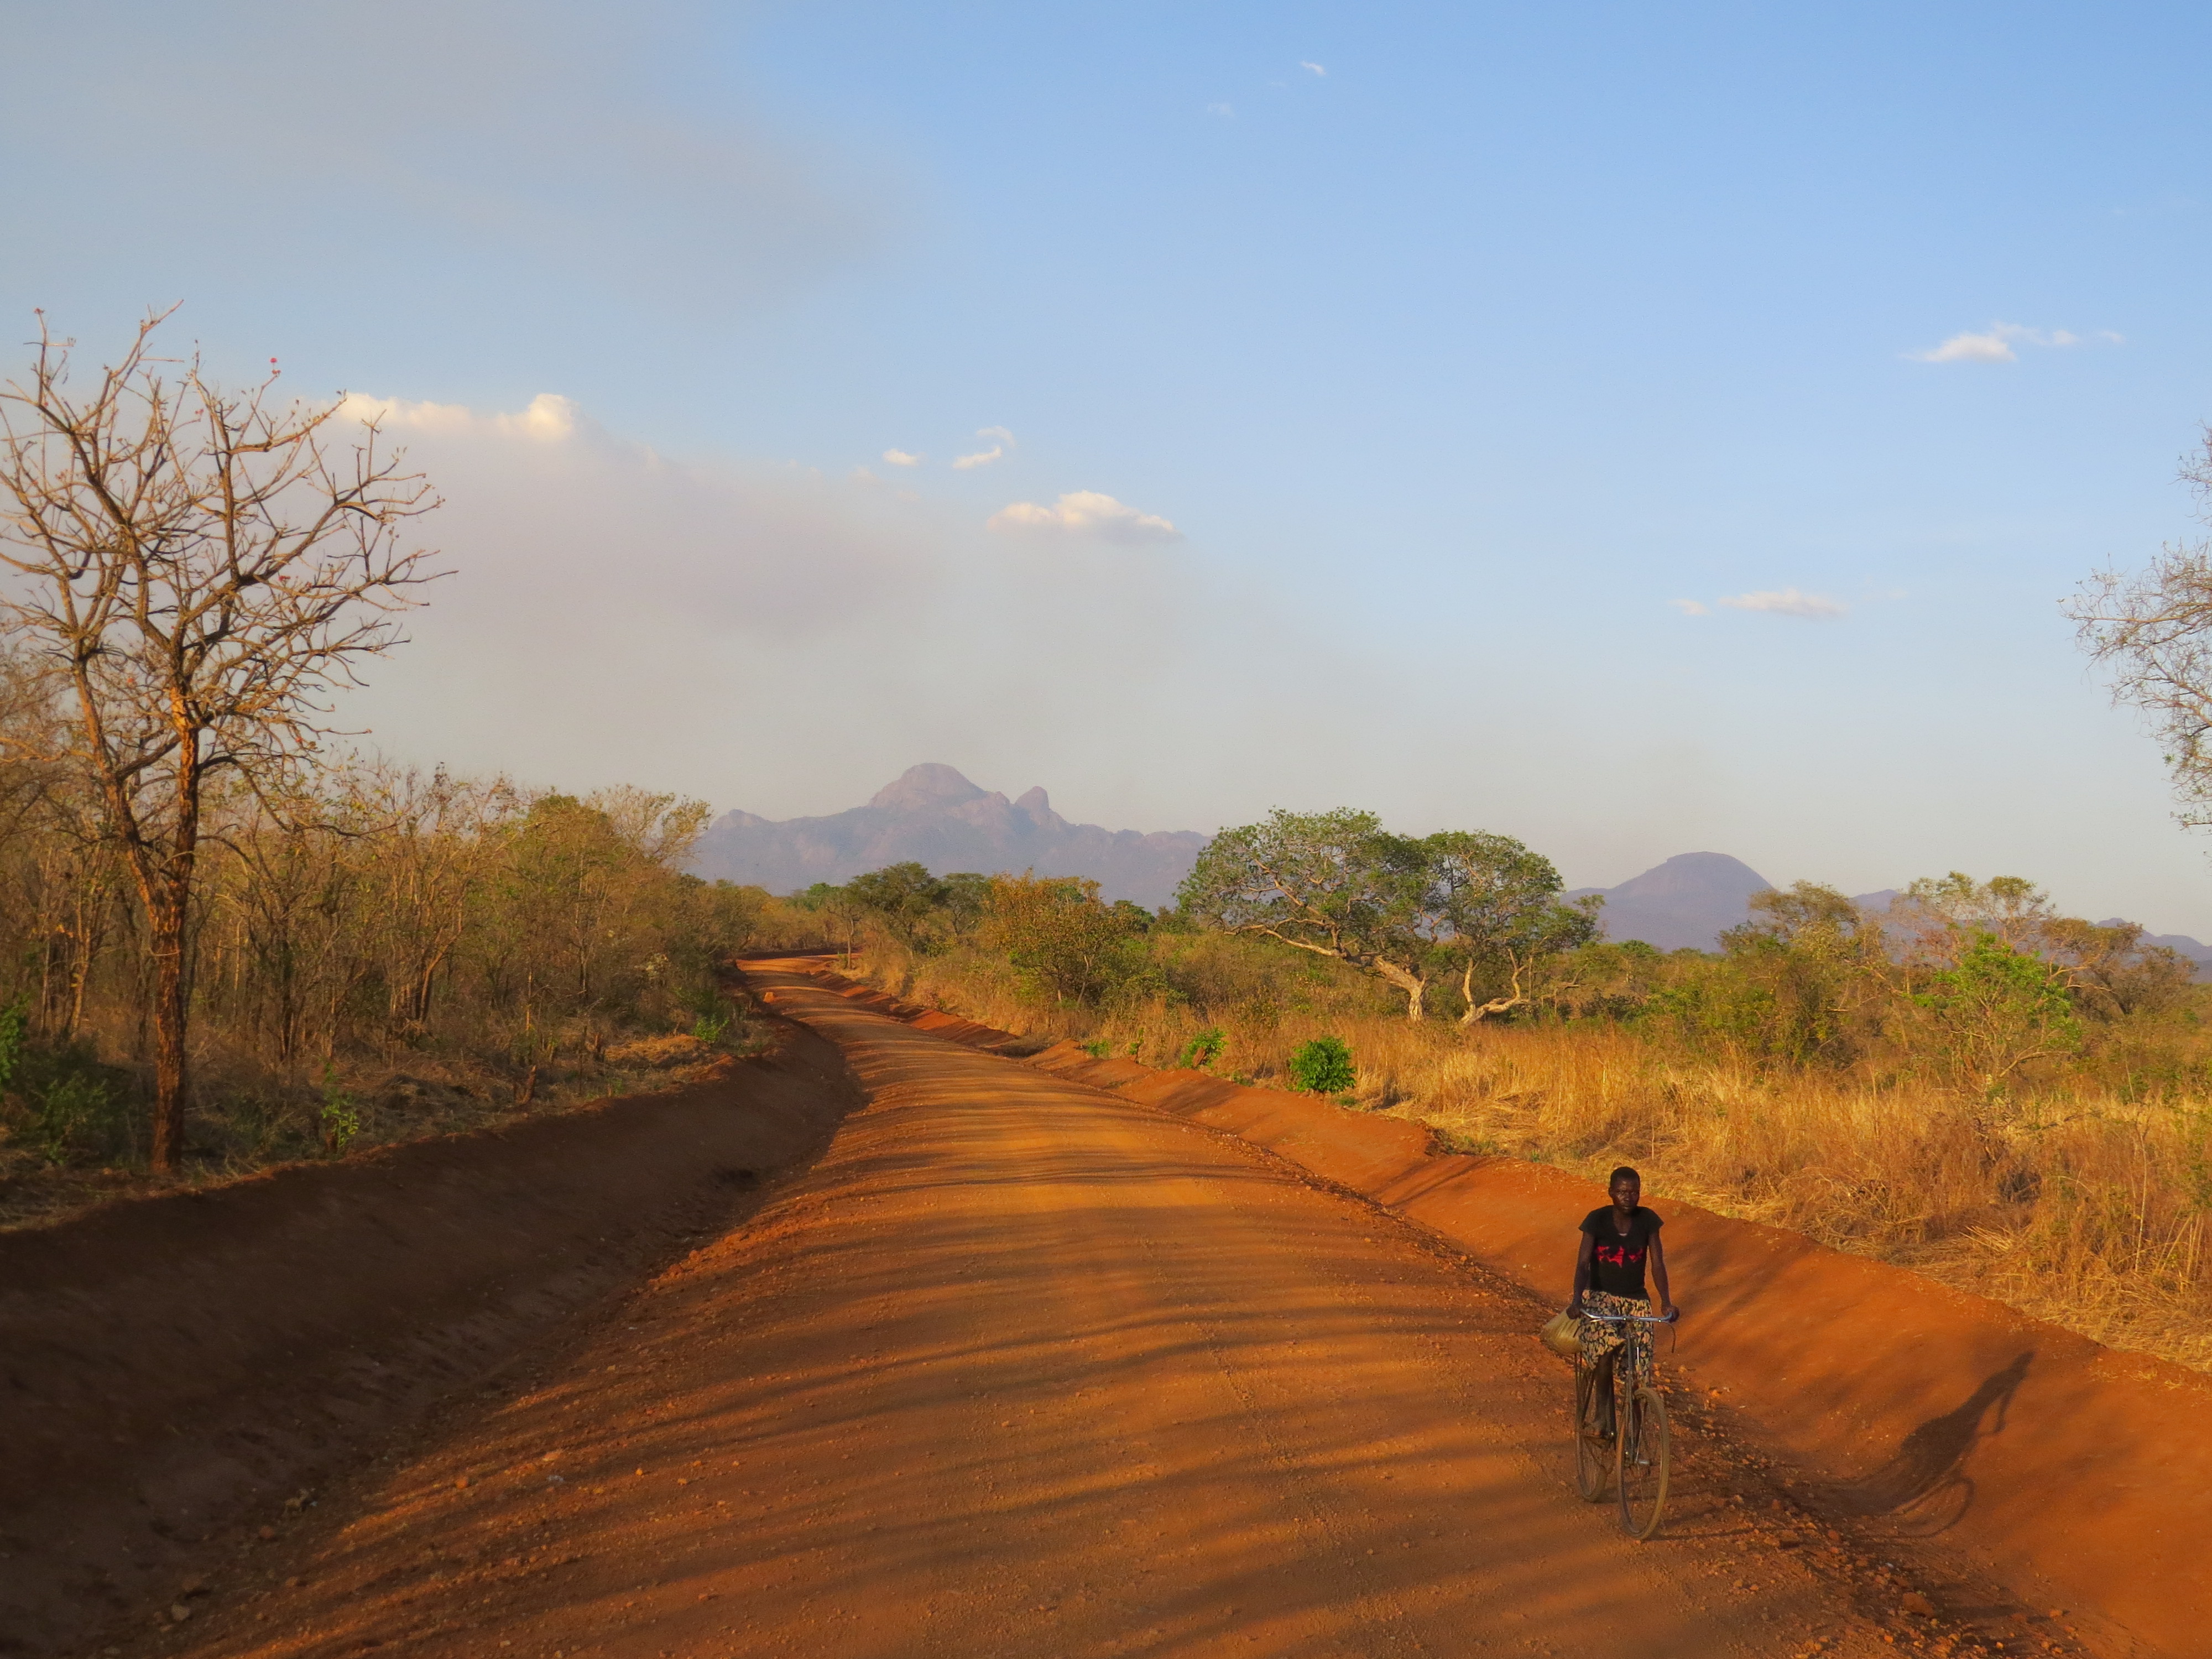 5 Day Uganda wildlife road trip to Kidepo Valley National Park